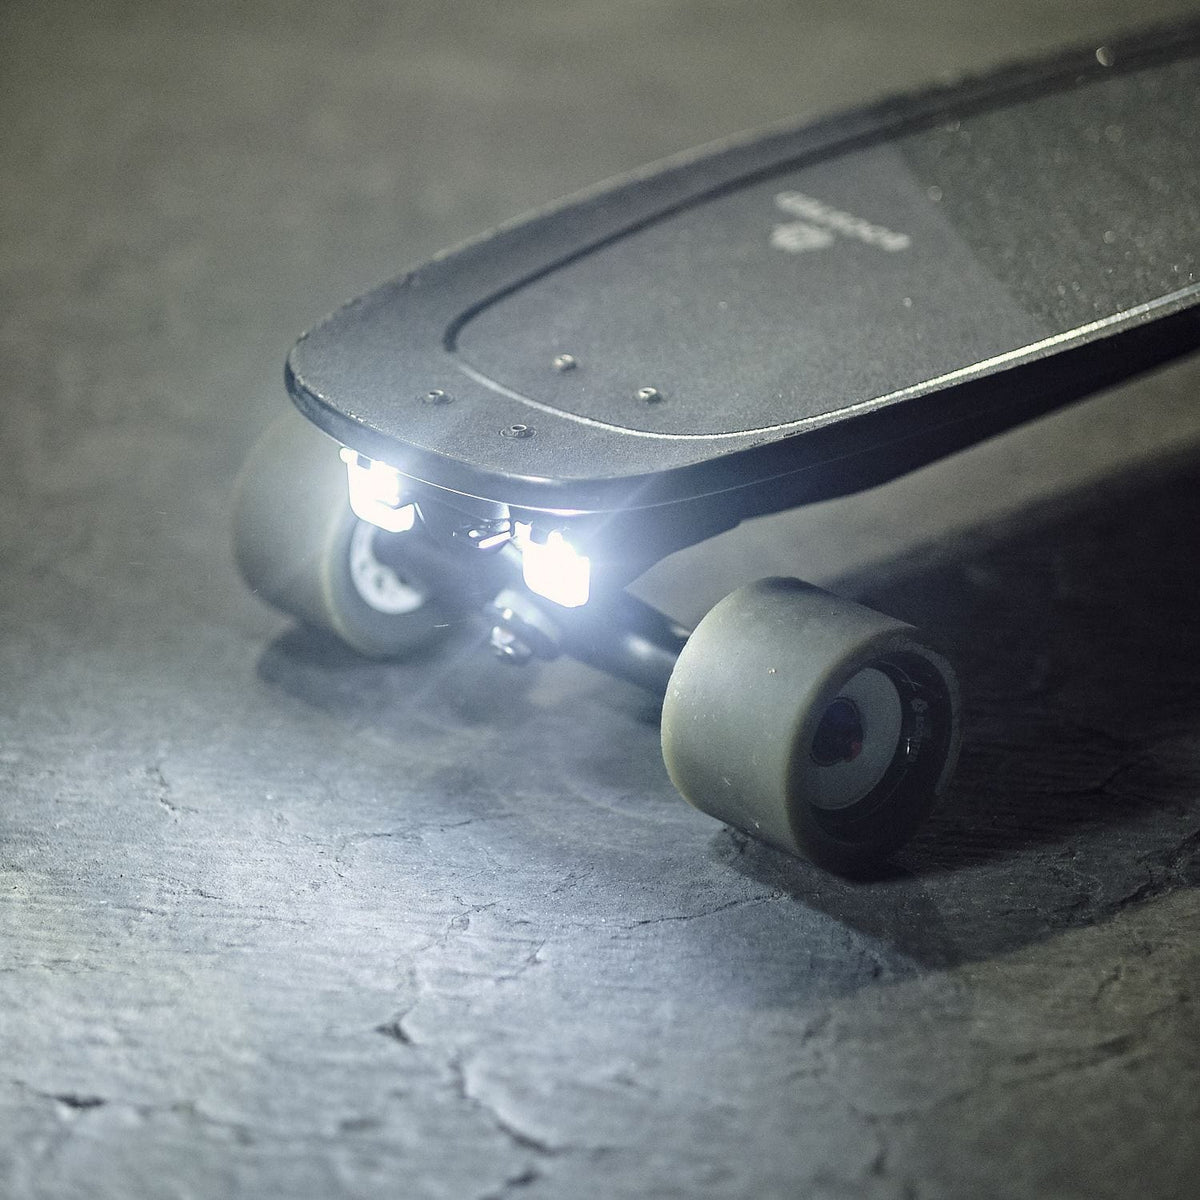 SL-300 Skateboard Headlights